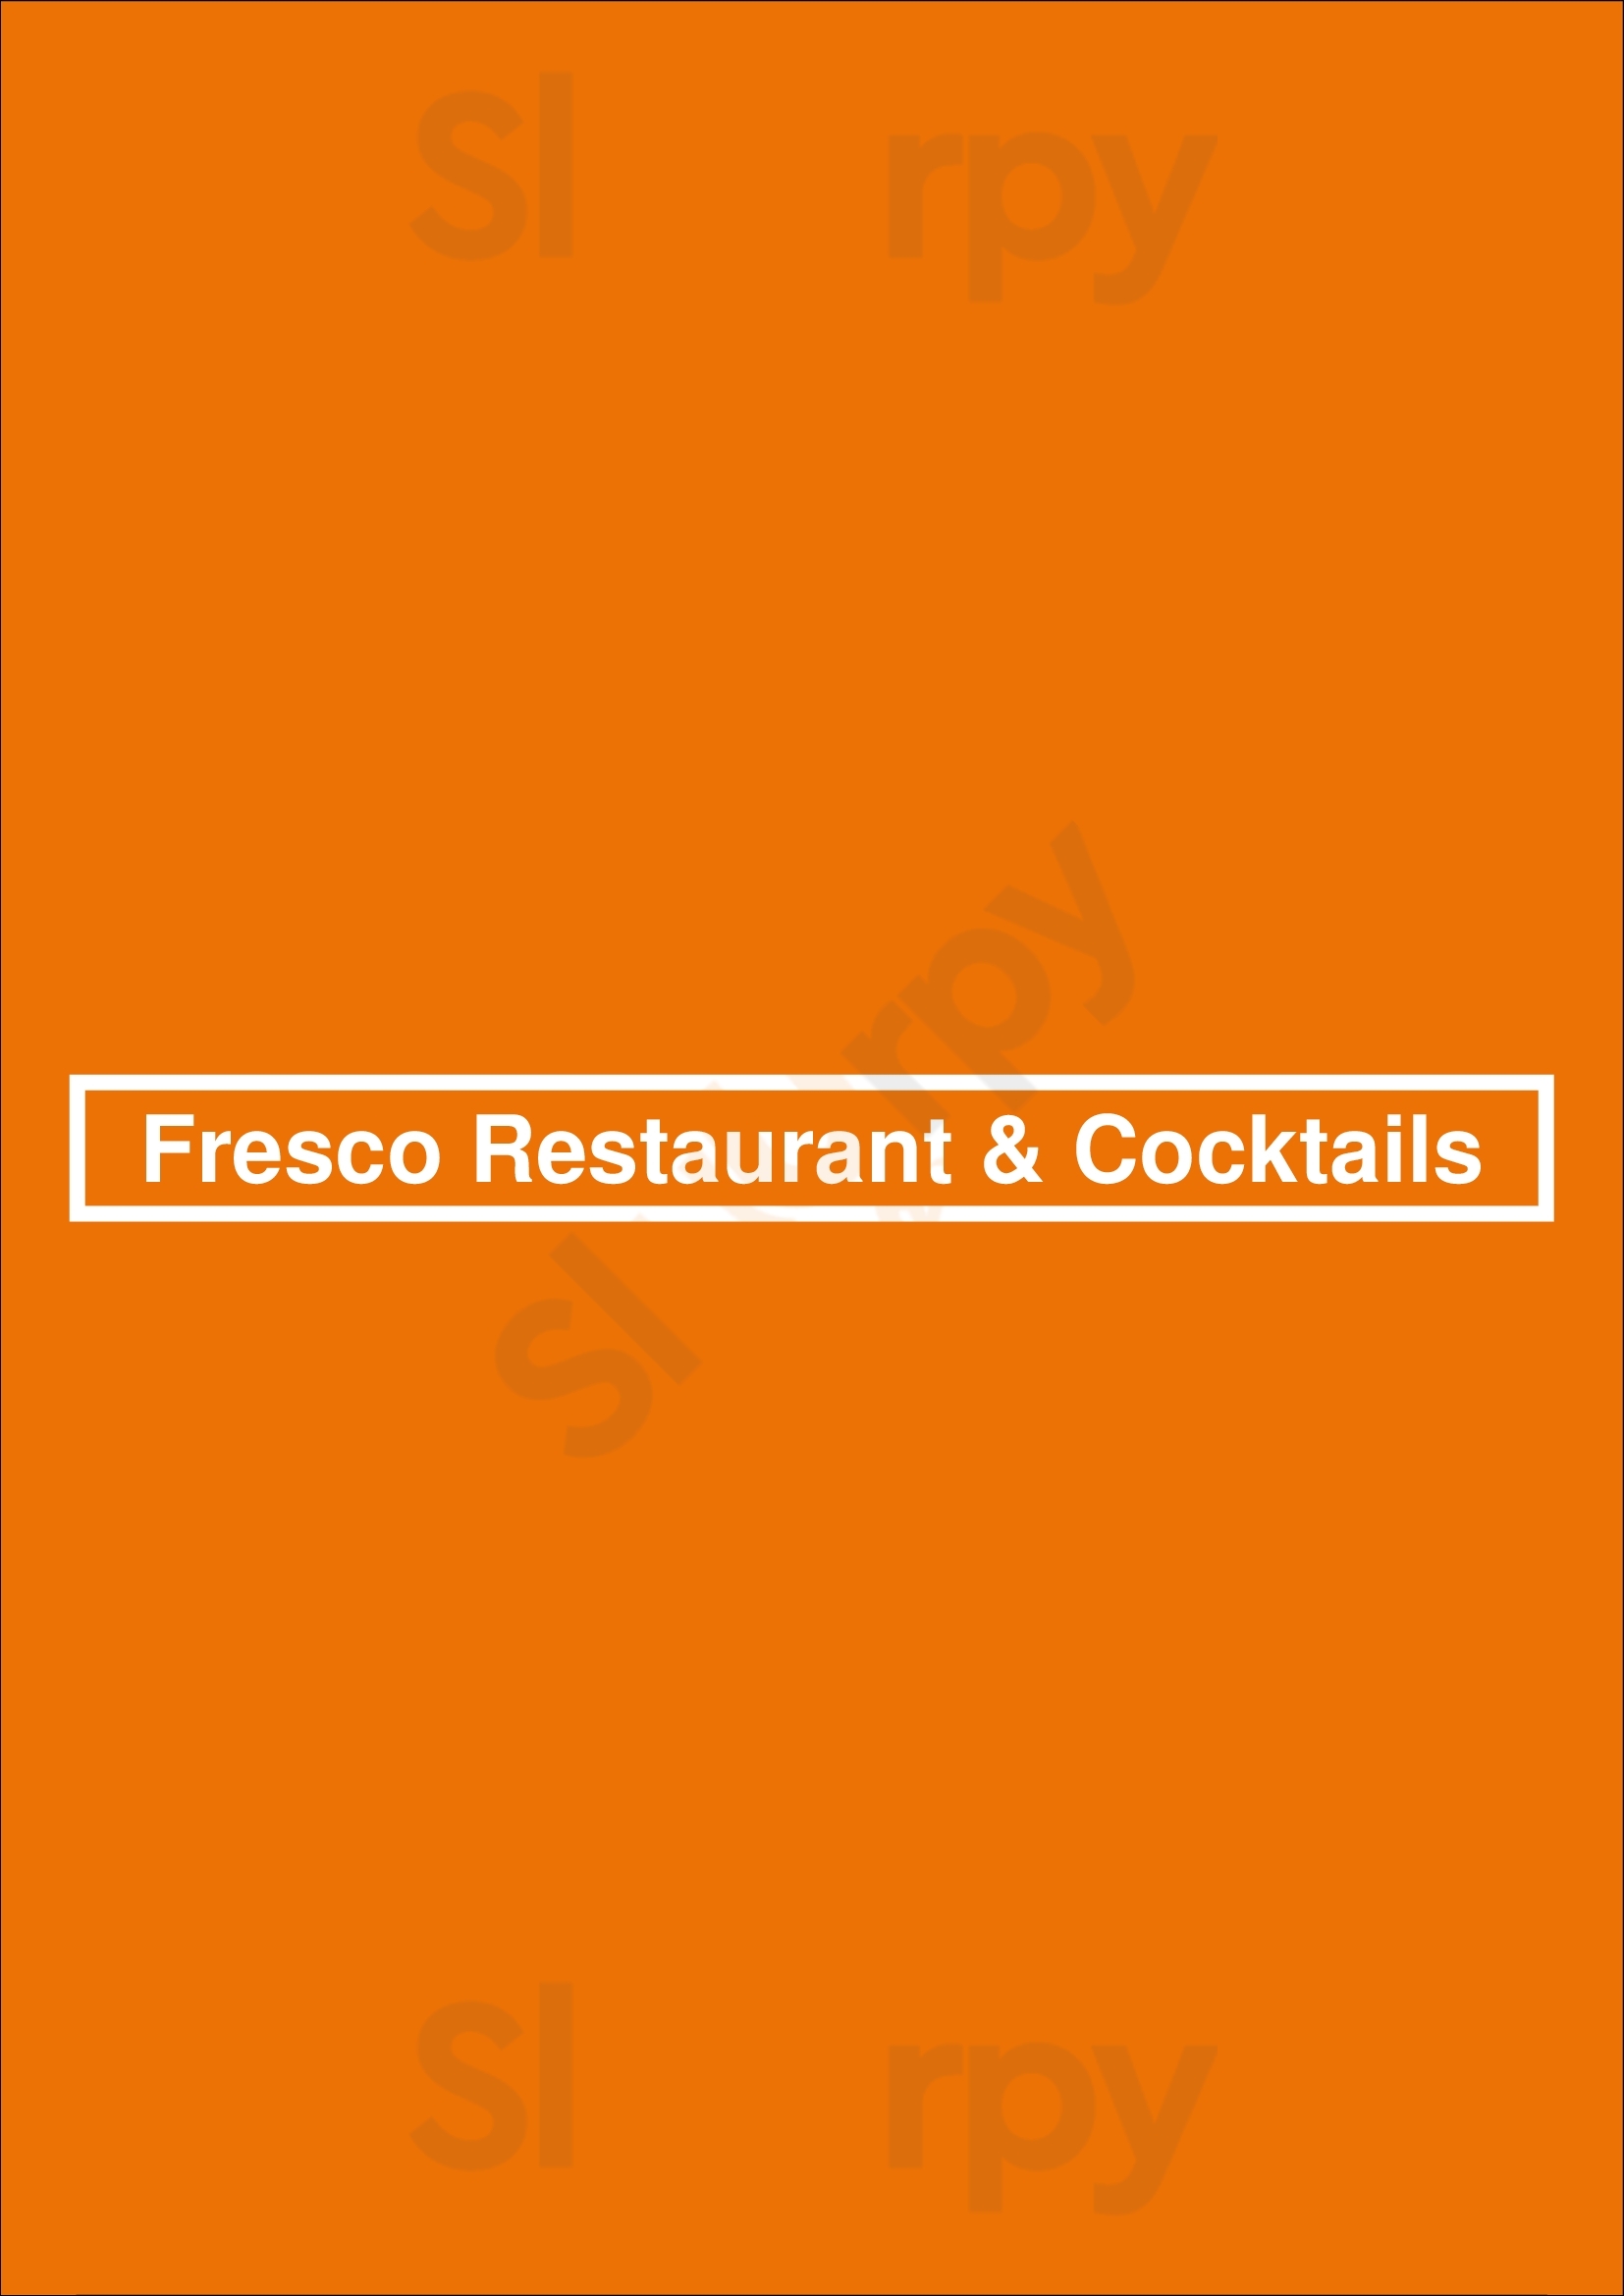 Fresco Restaurant & Cocktails Fayetteville Menu - 1